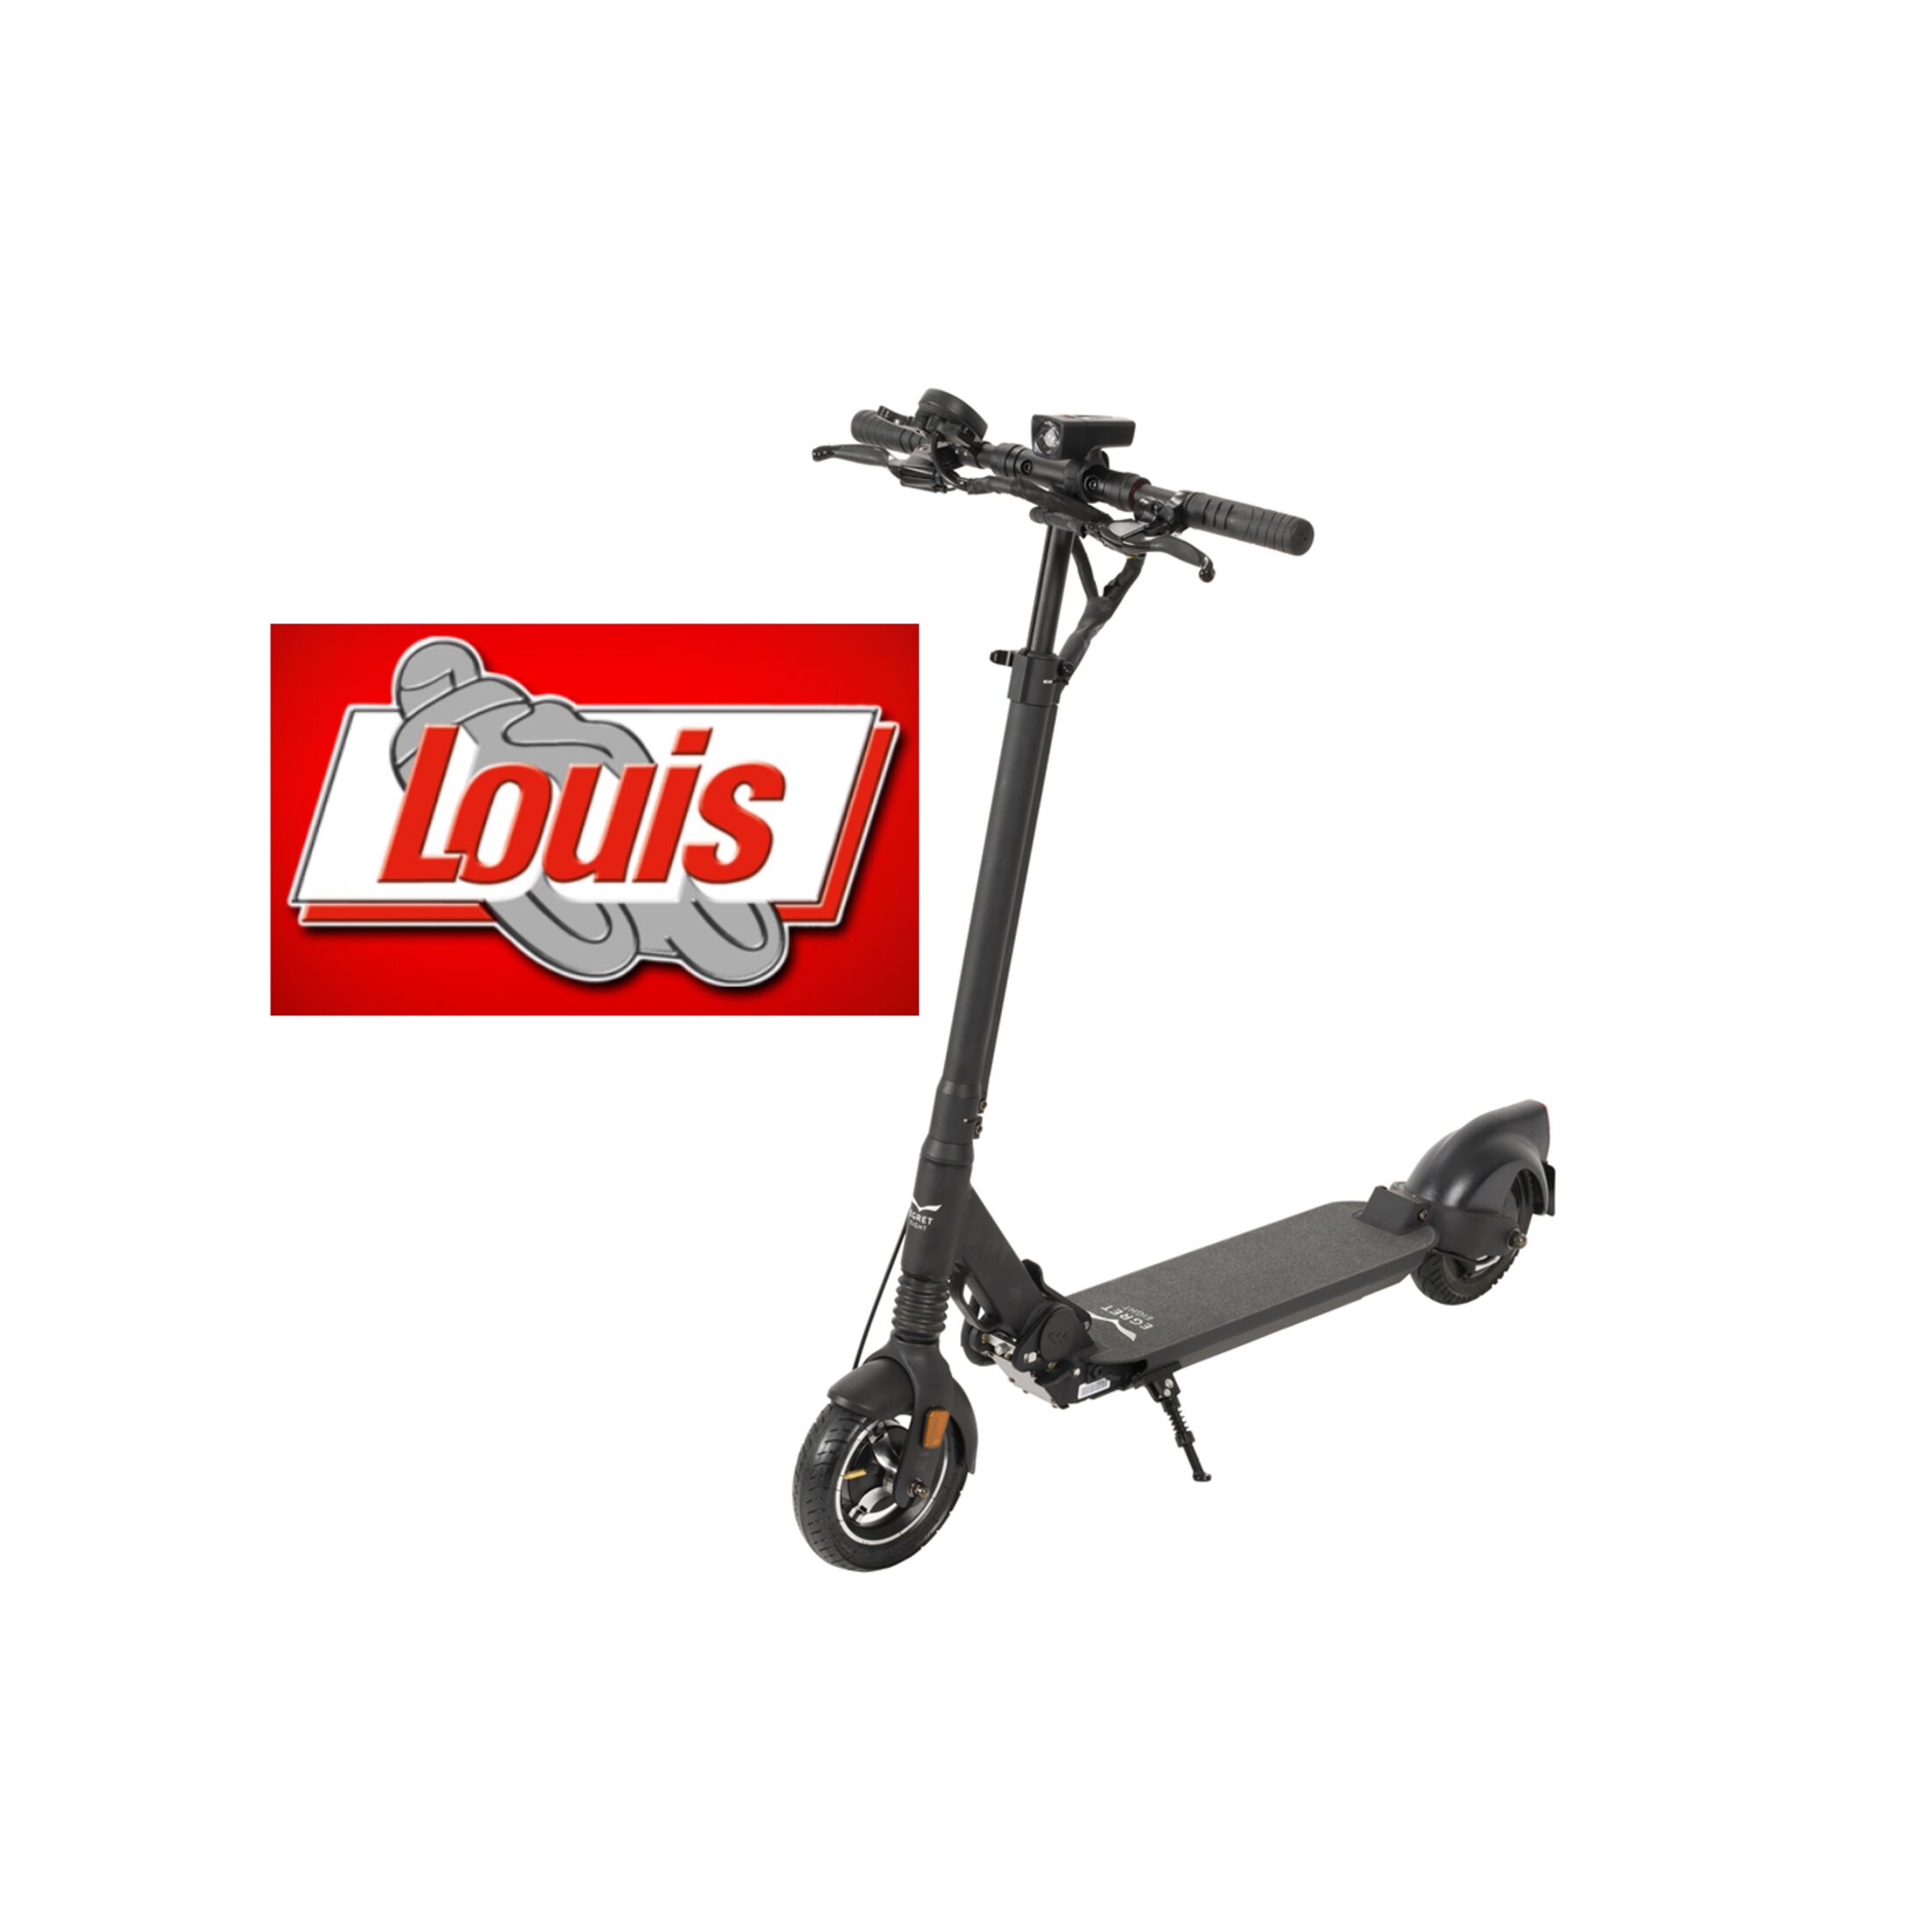 Louis verkauft wieder Fahrzeuge: E-Scooter im Angebot